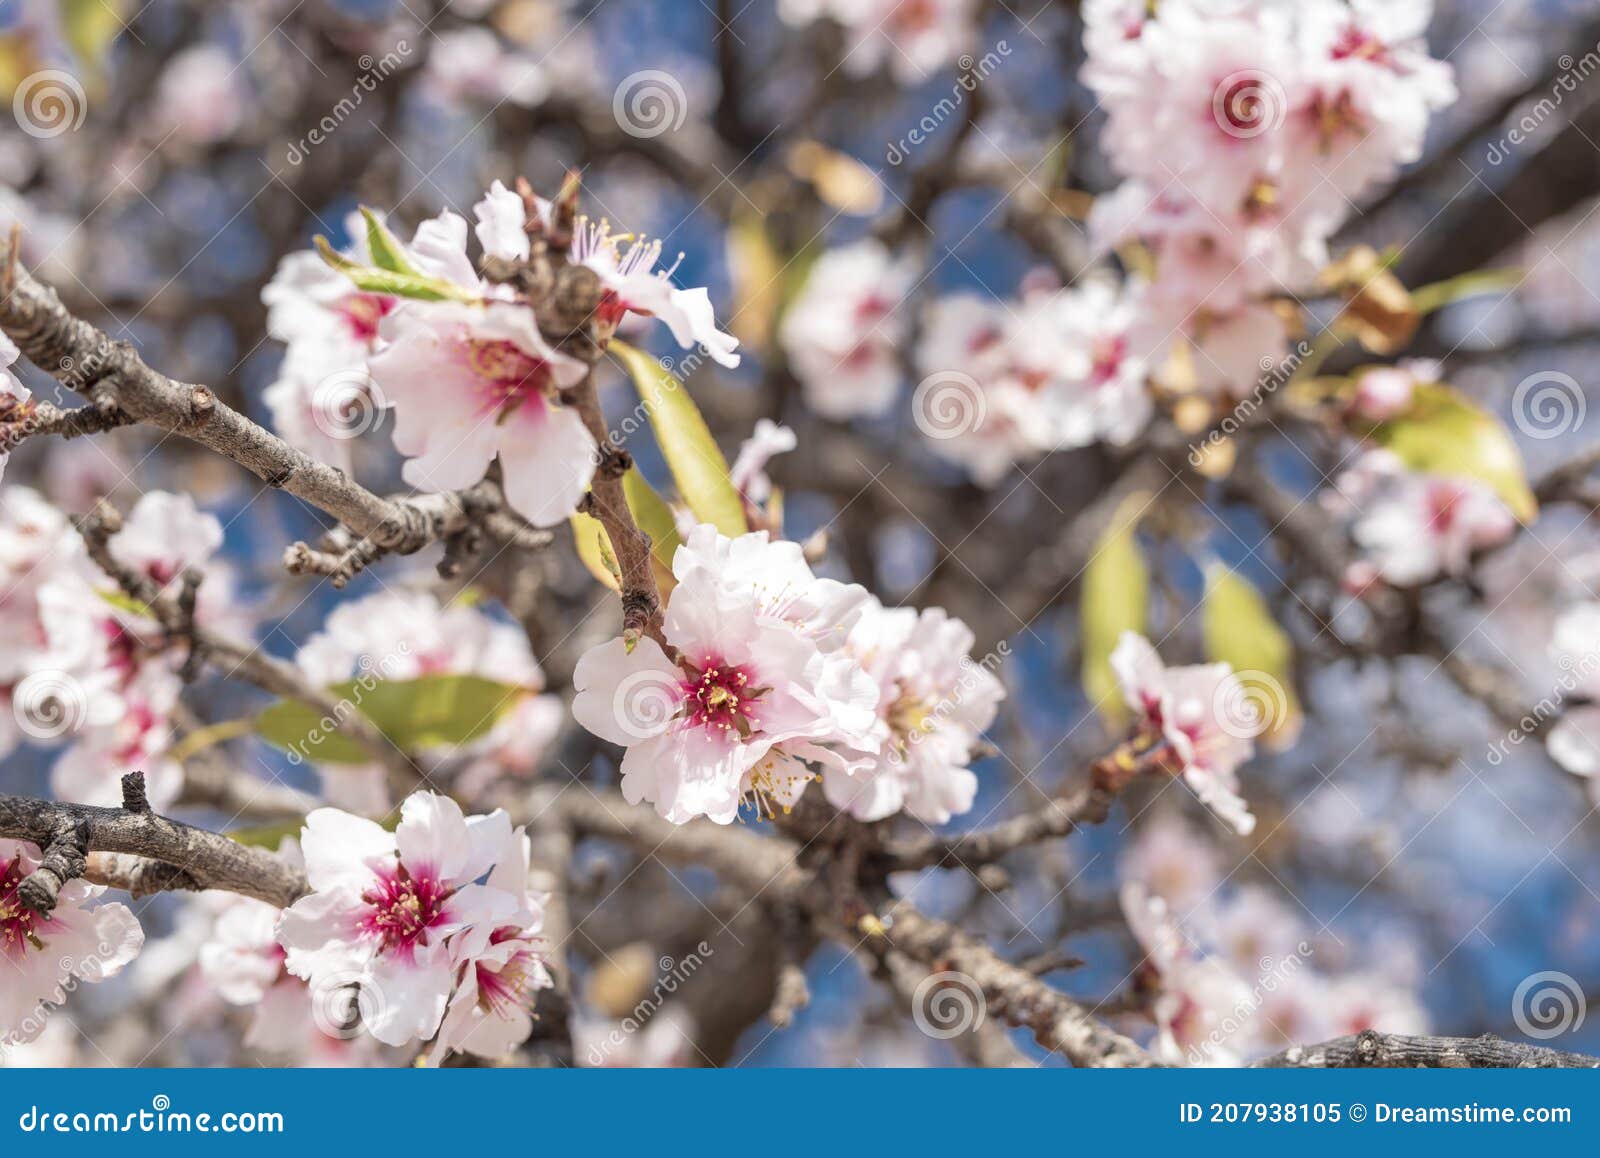 almendro en flor. almond tree blooming